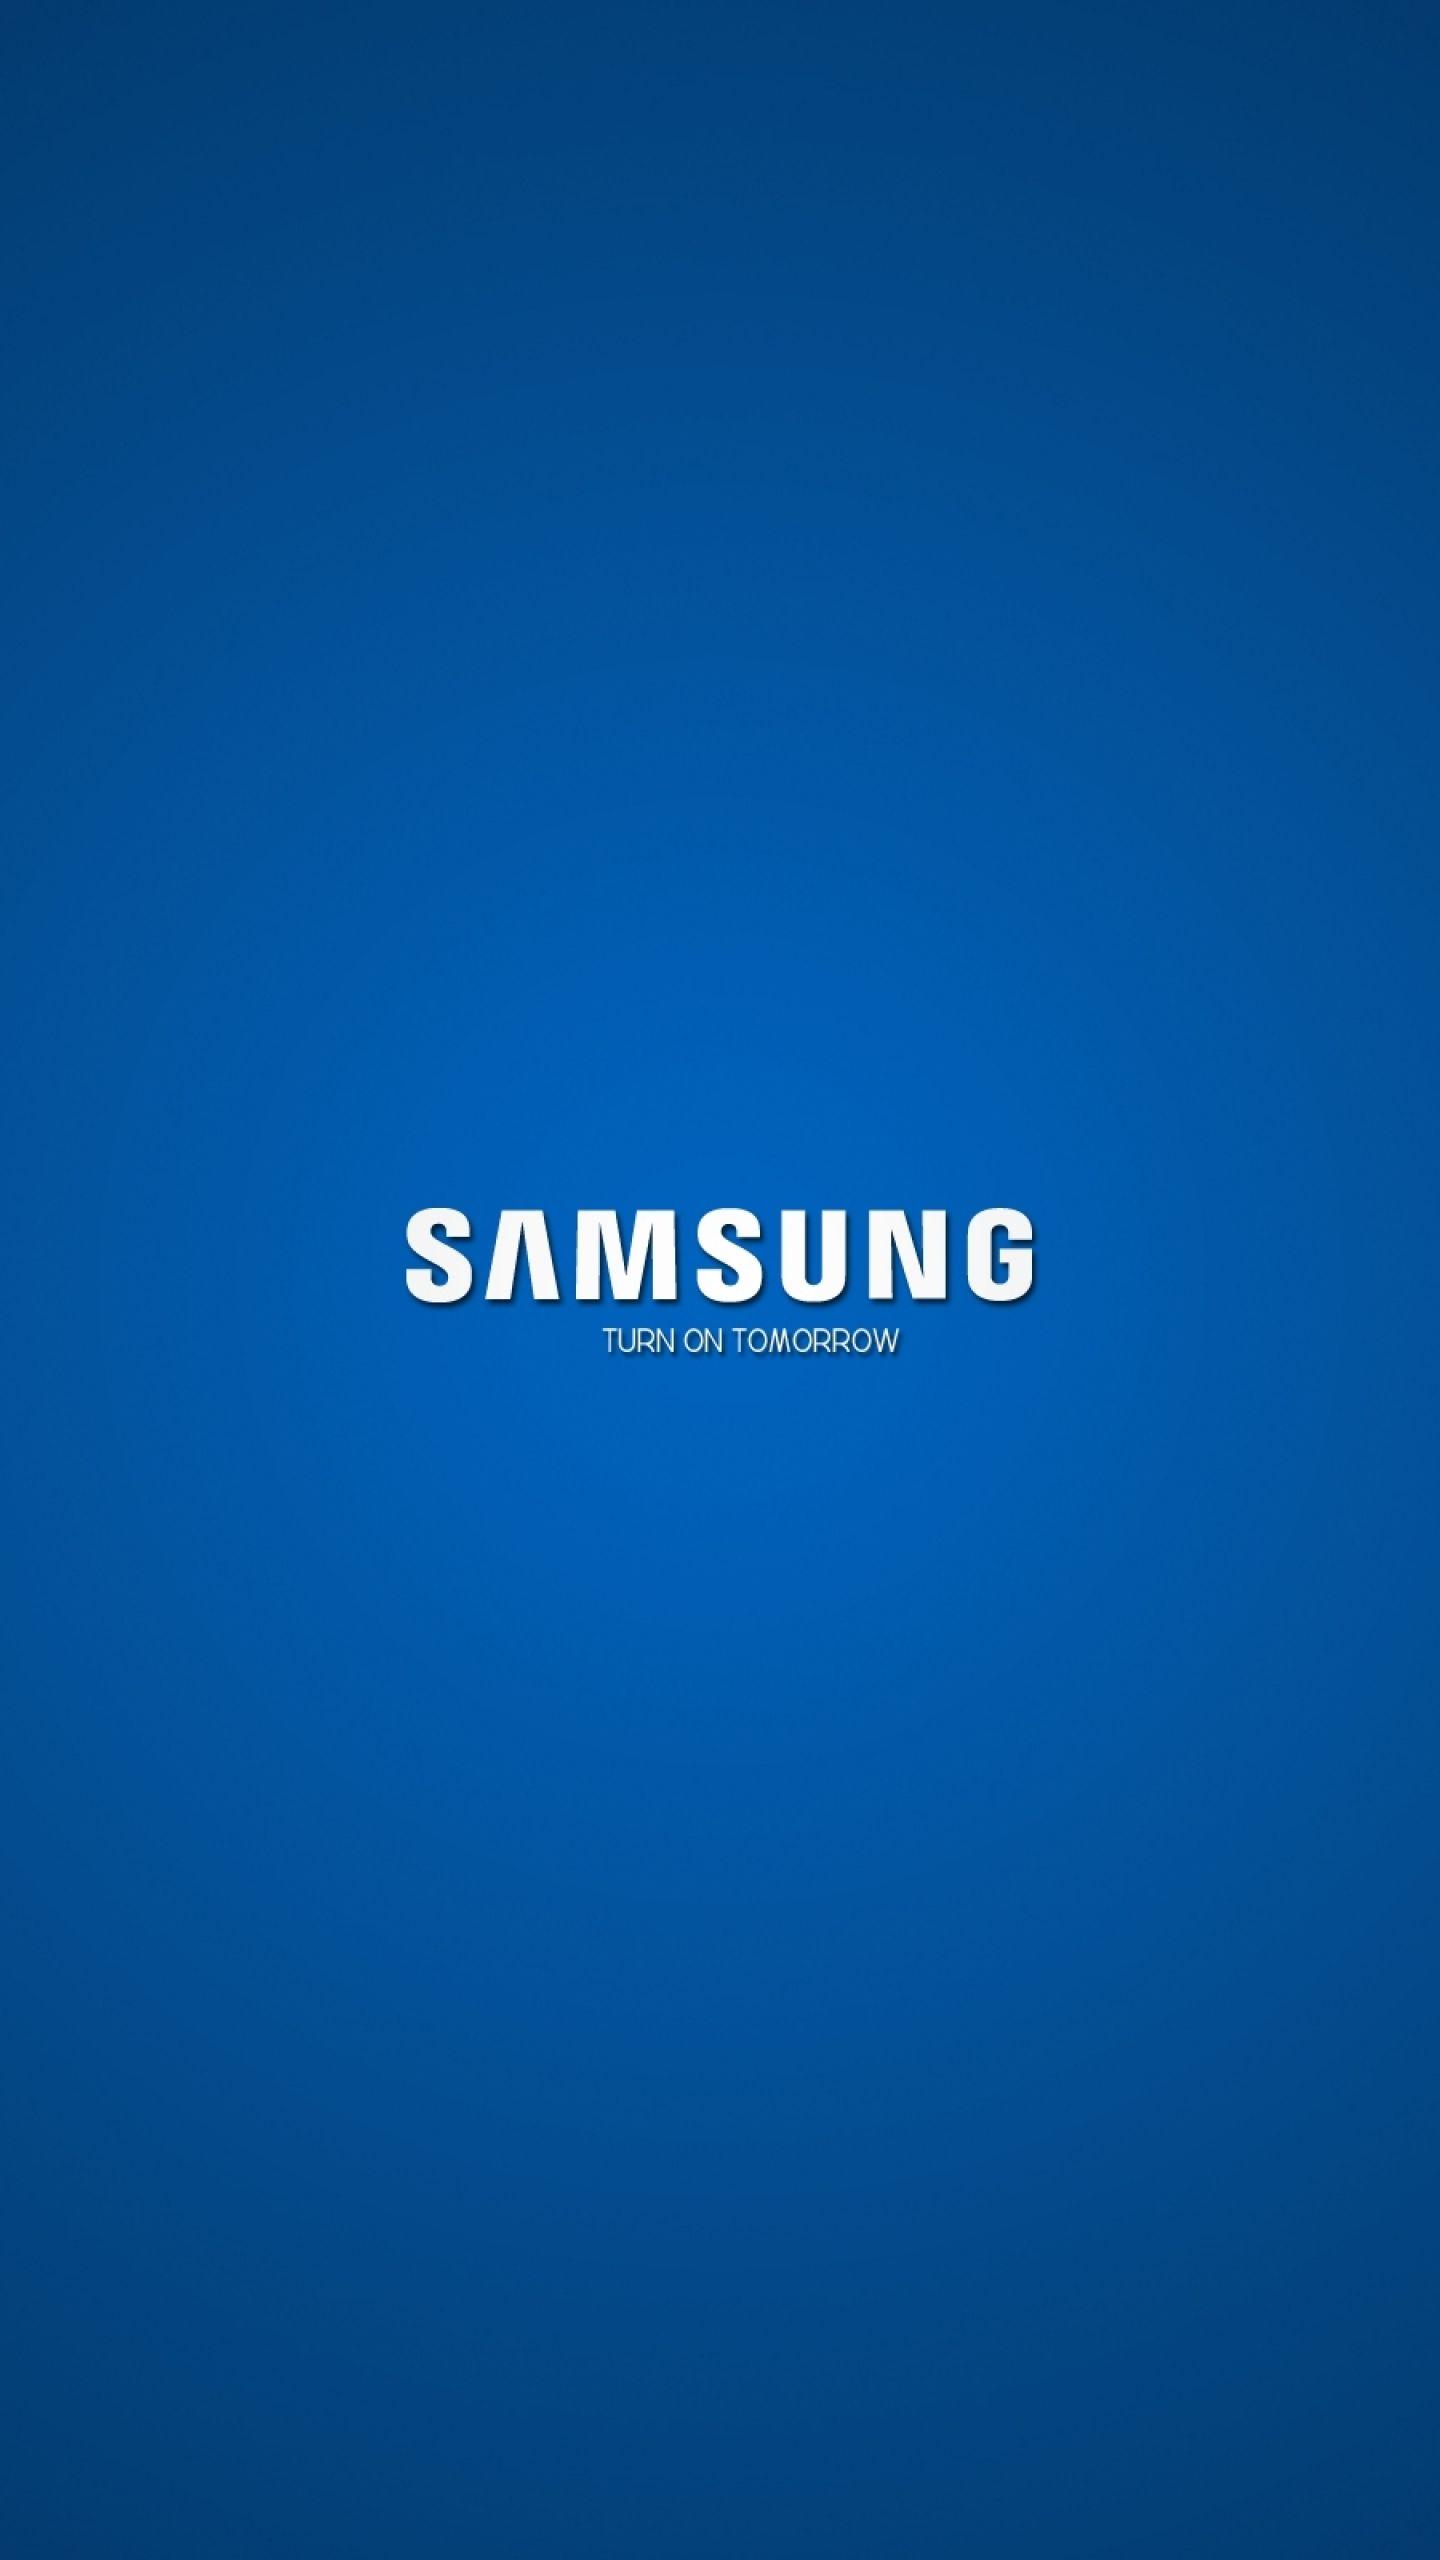 QHD Samsung Galaxy S S Edge, Note, LG G4 Company Wallpaper HD